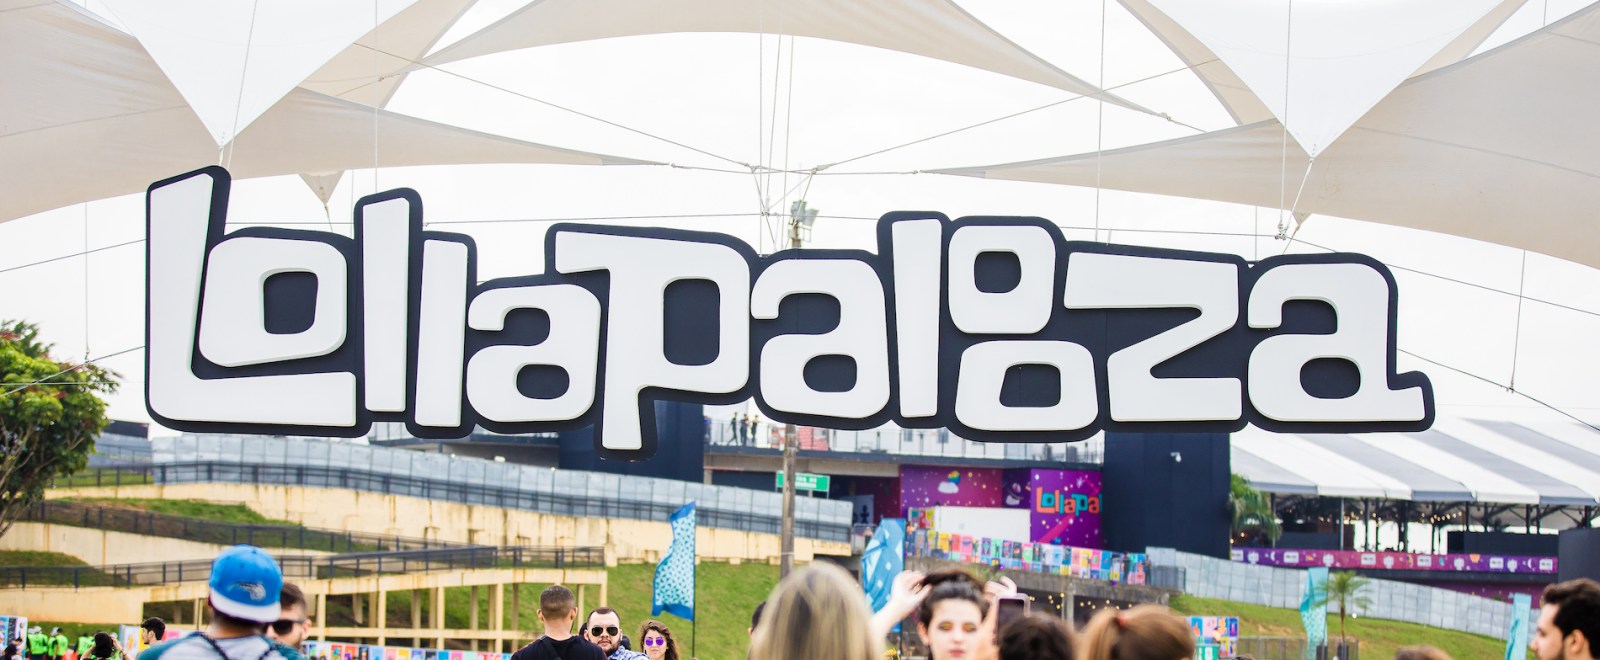 Lollapalooza logo sign